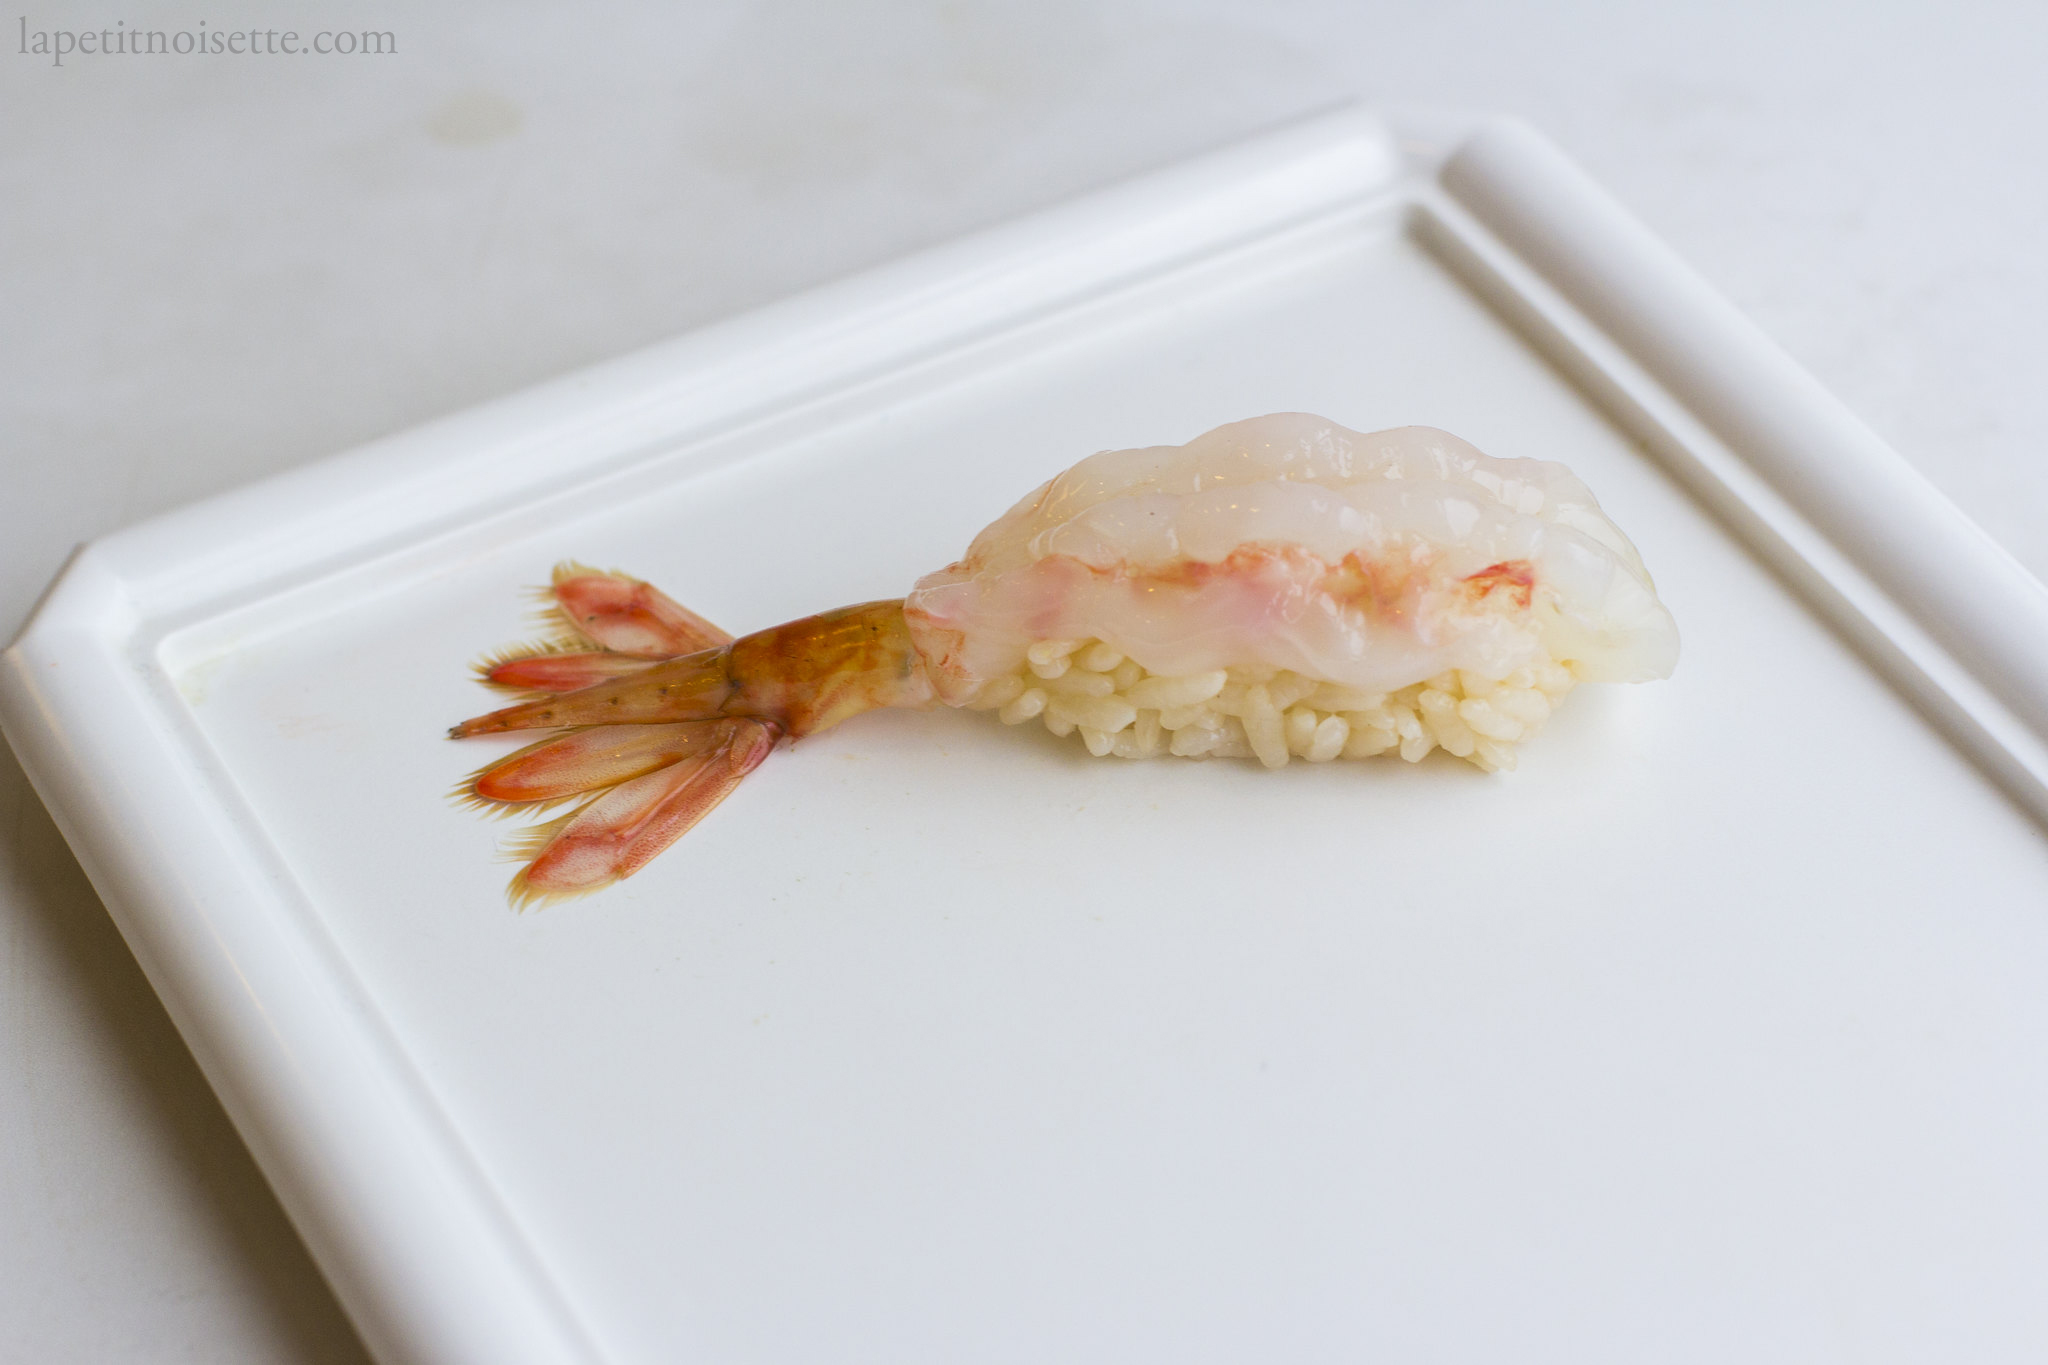 botan ebi nigiri made during practice at a Michelin starred sushi restaurant.